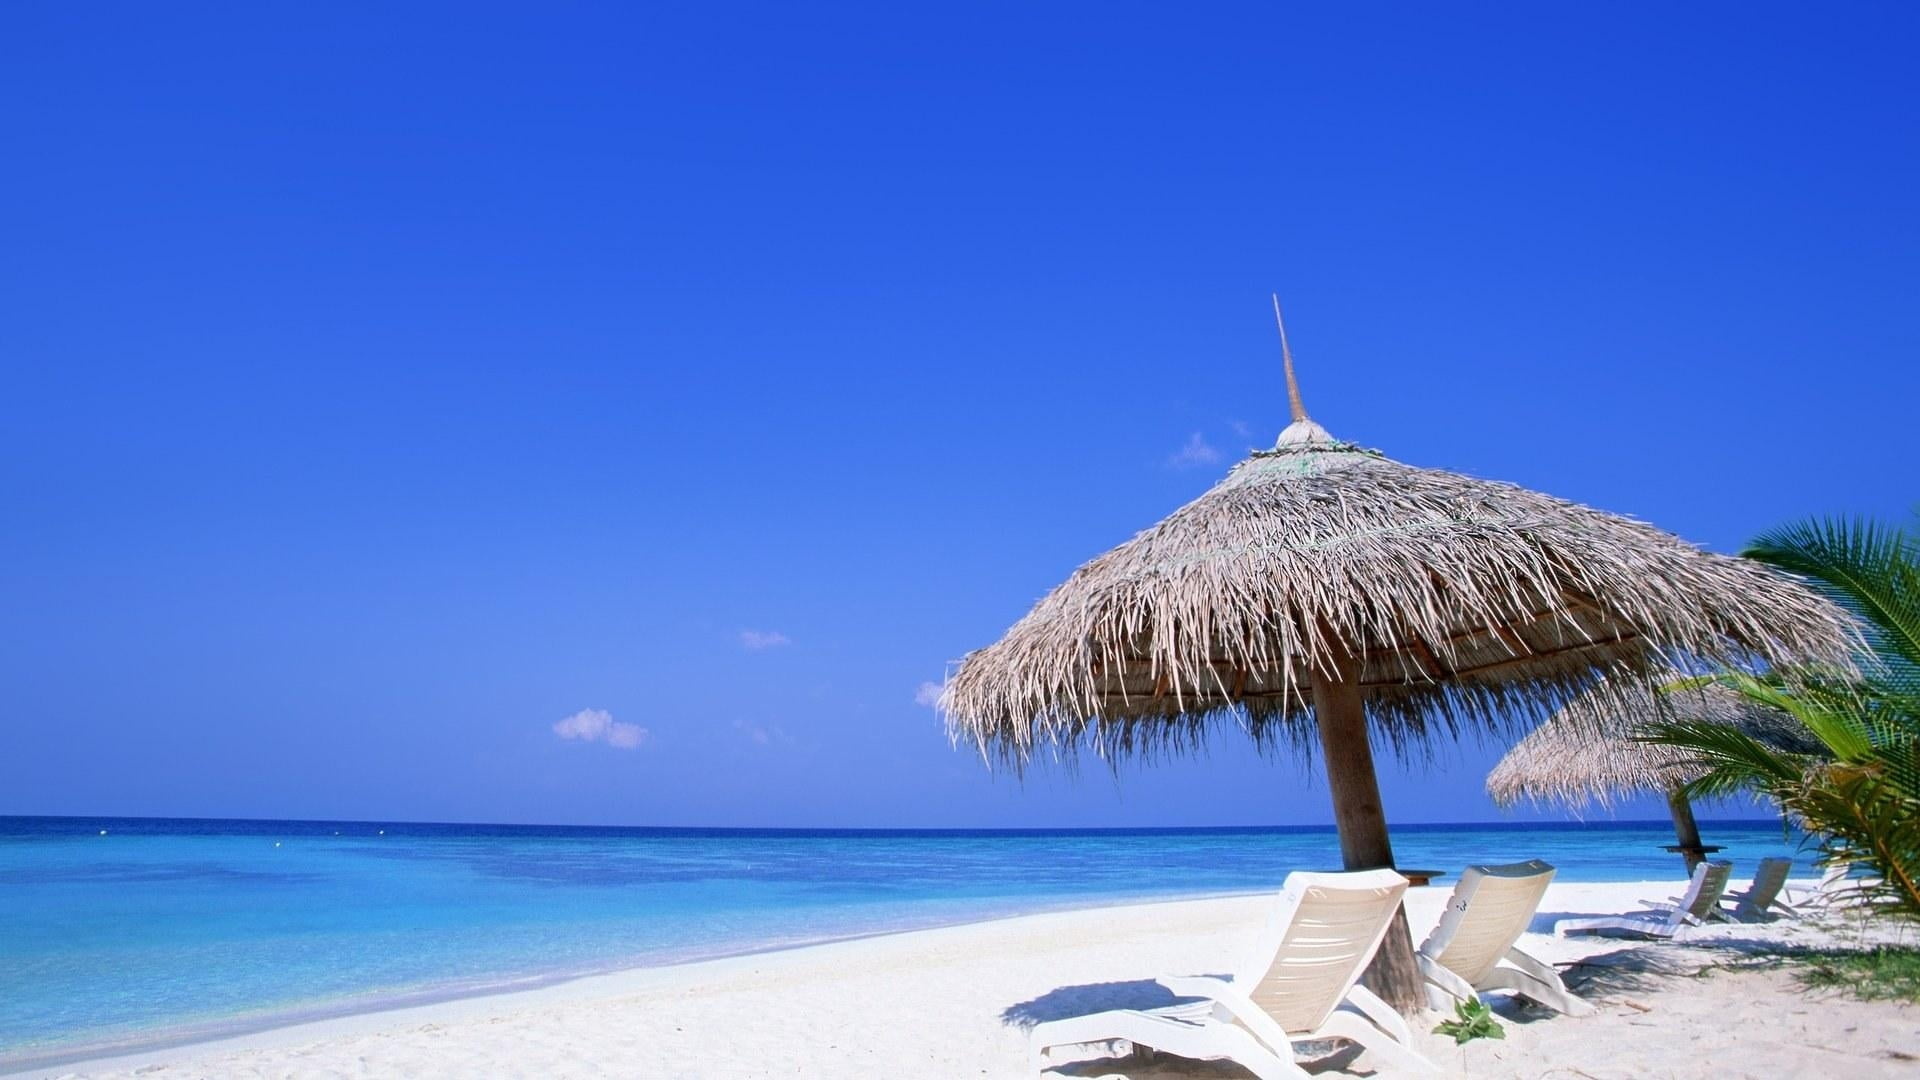 Beach umbrella and chair, Seashore charm, Coastal relaxation, Nature's tranquility, 1920x1080 Full HD Desktop